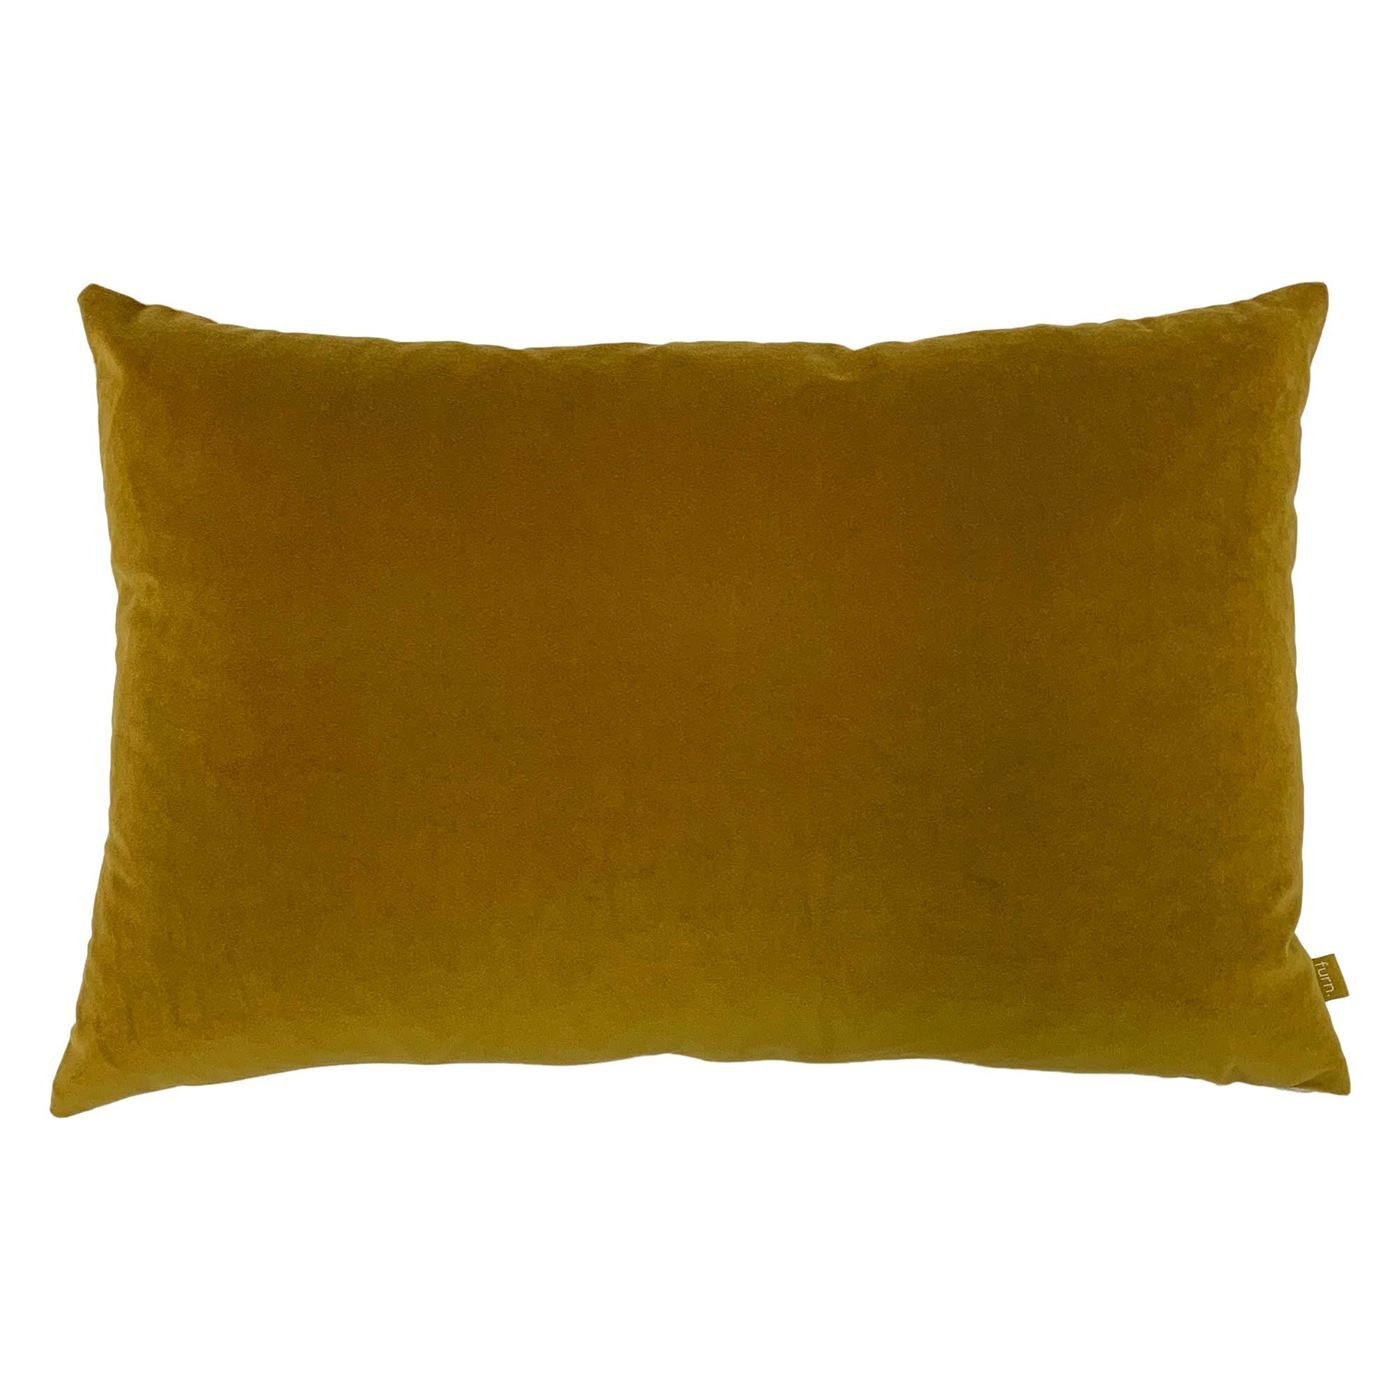 Velvet Mustard Cushion, Square, Yellow Fabric - Barker & Stonehouse - image 1